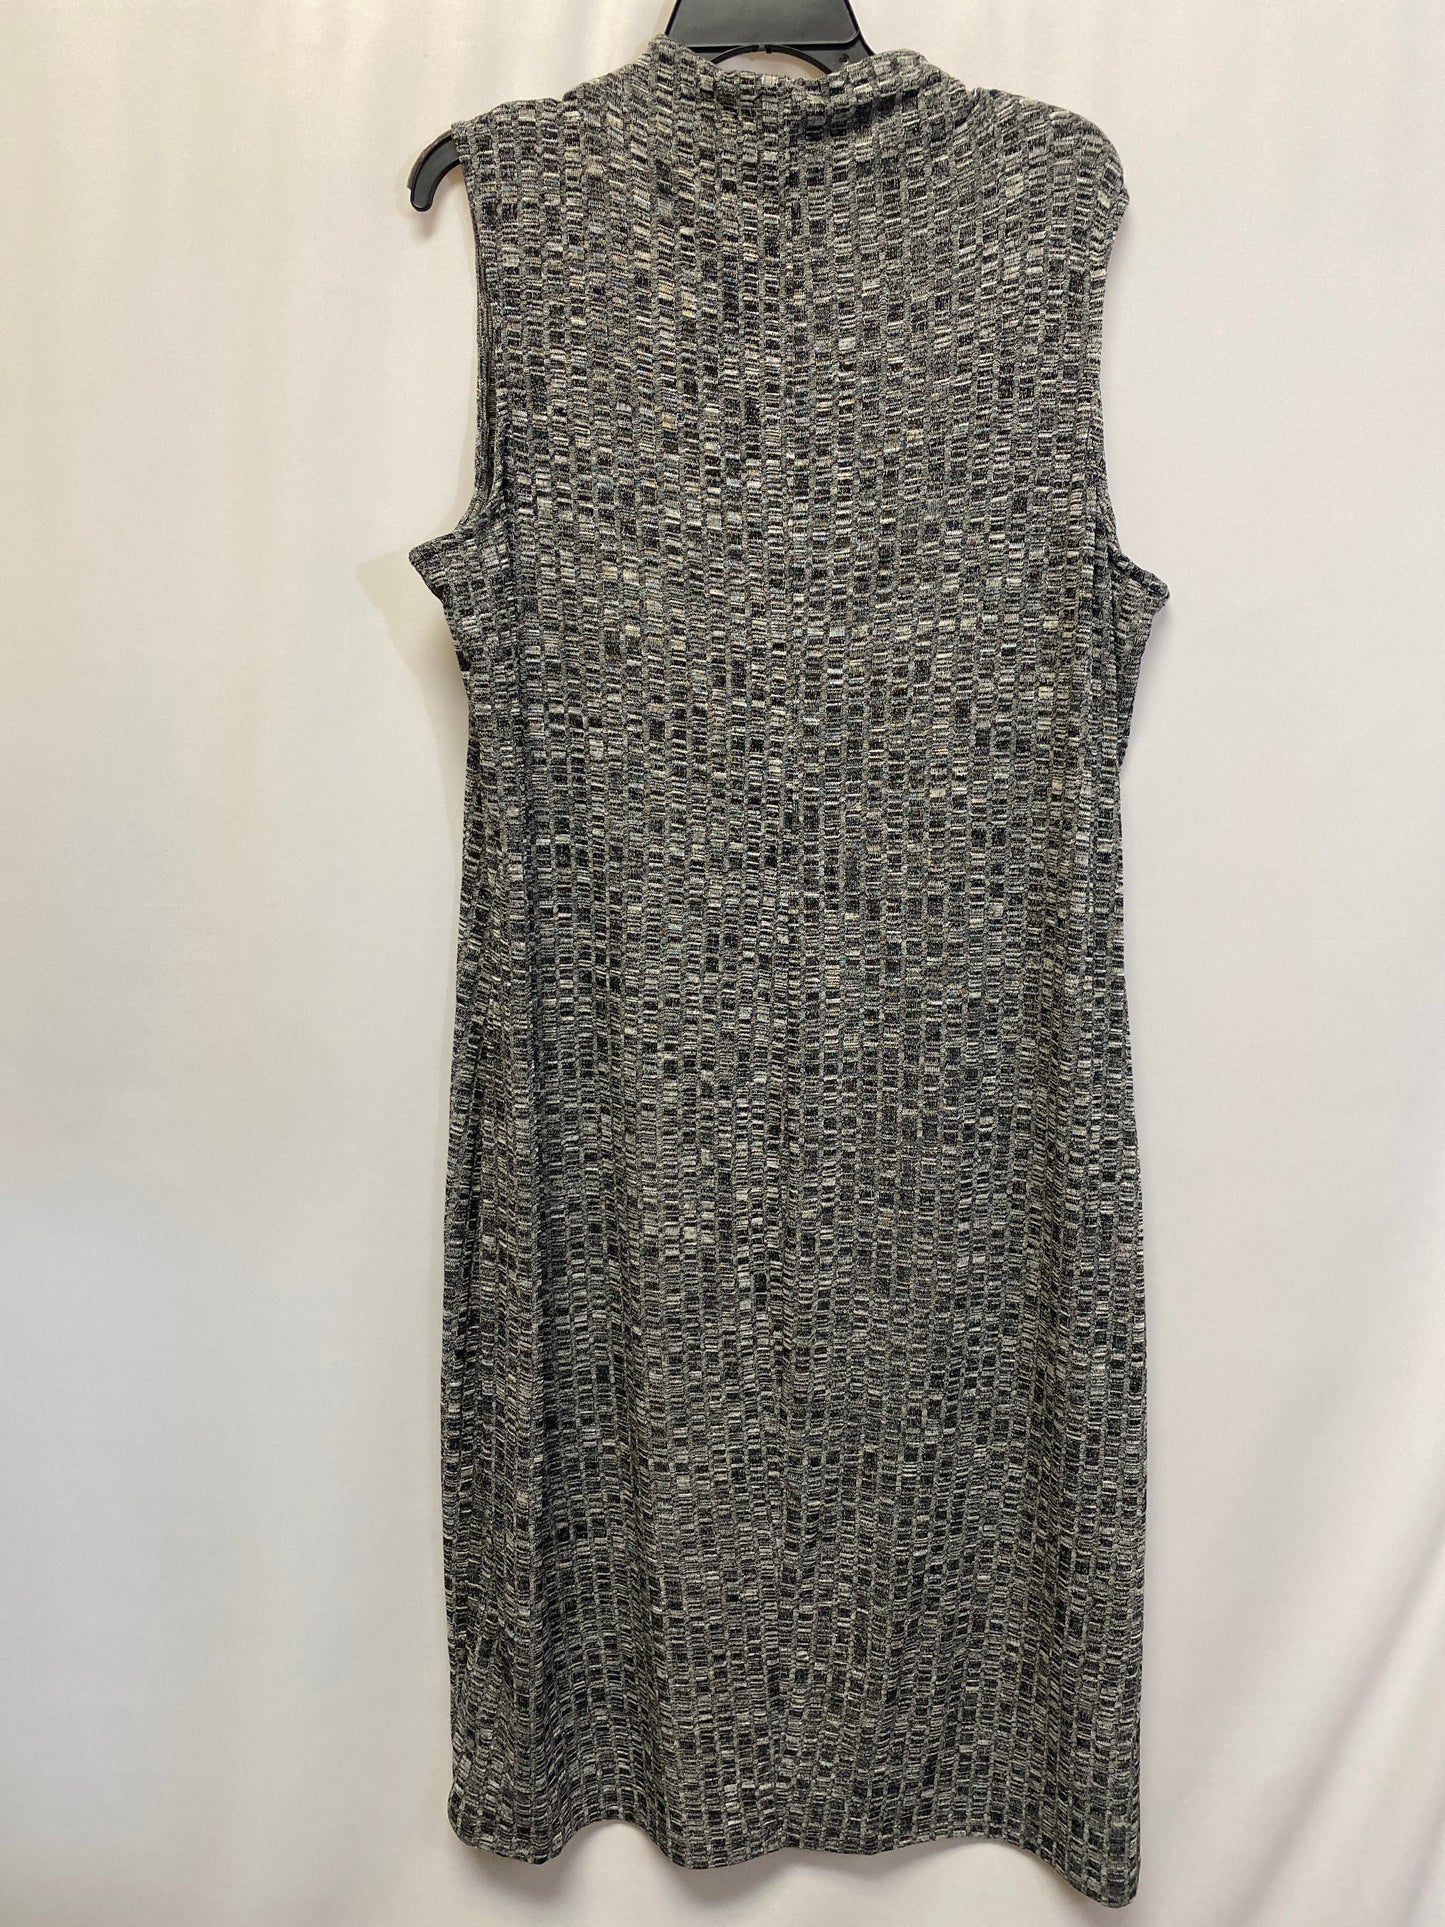 Dress Casual Midi By Just Fab  Size: 3x